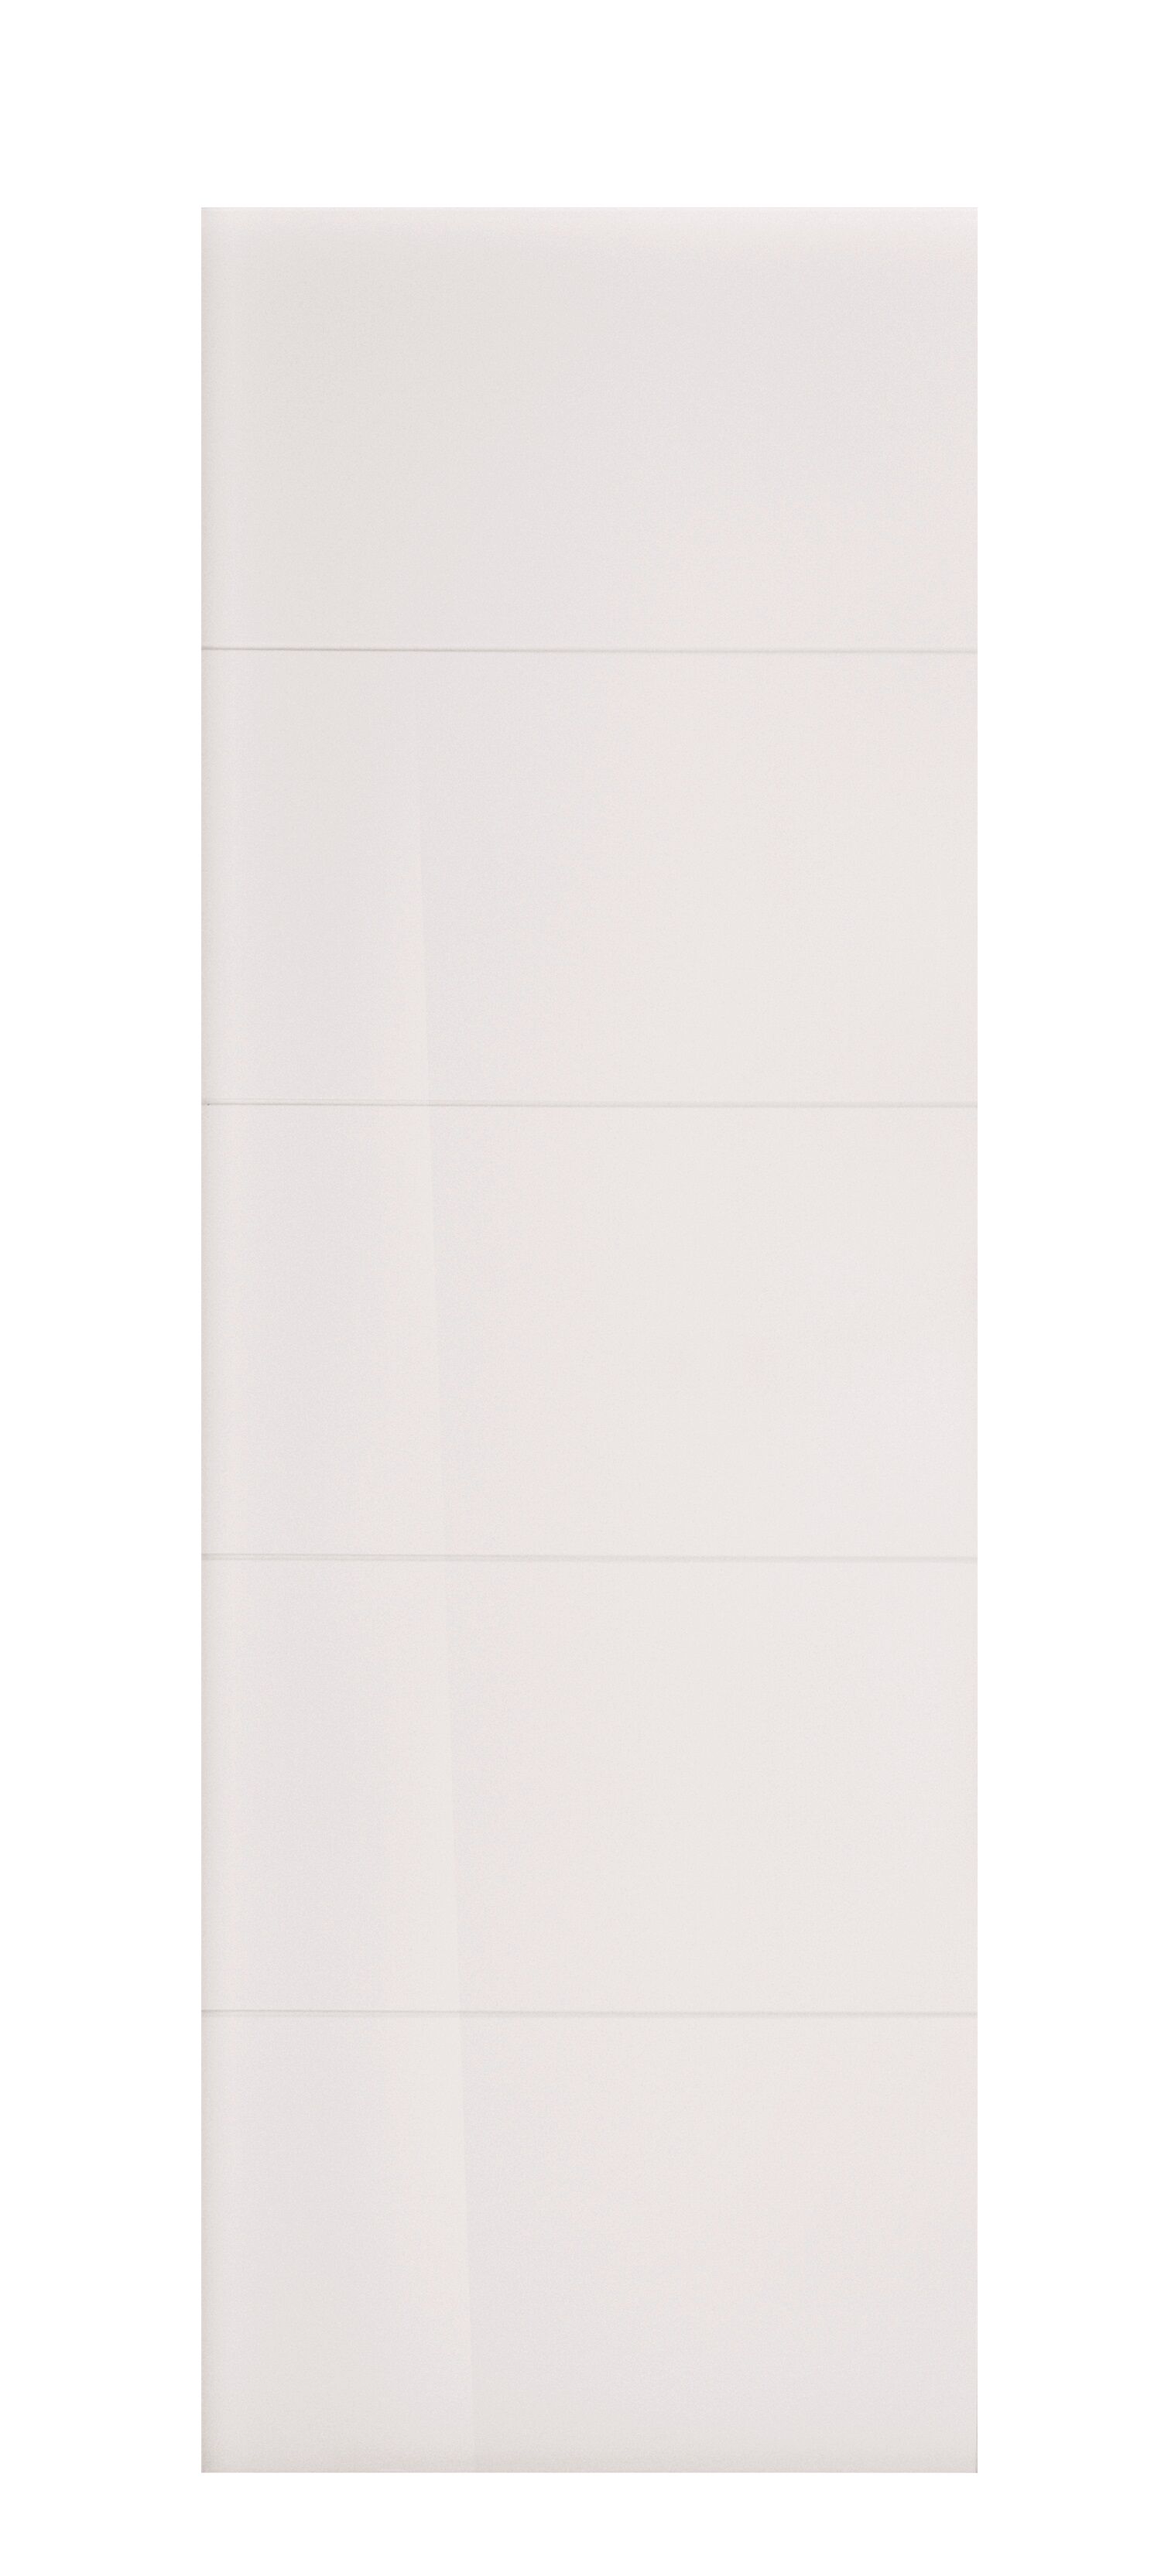 ARTENS Puerta de interior corredera lucerna blanco de 92.5 cm